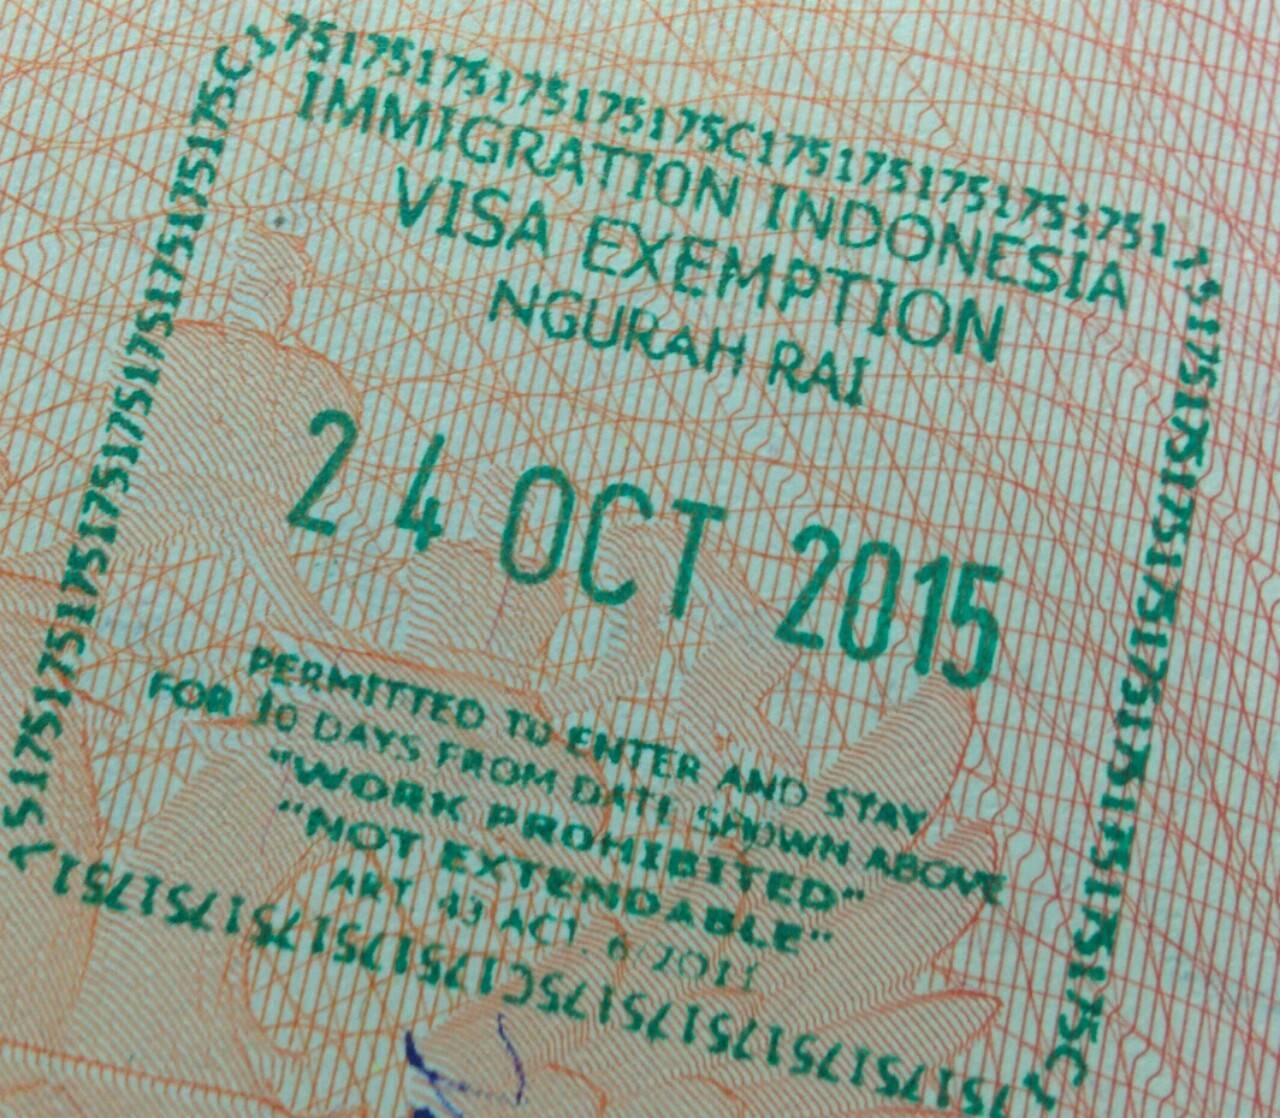 Нужна ли виза на бали: подробная информация